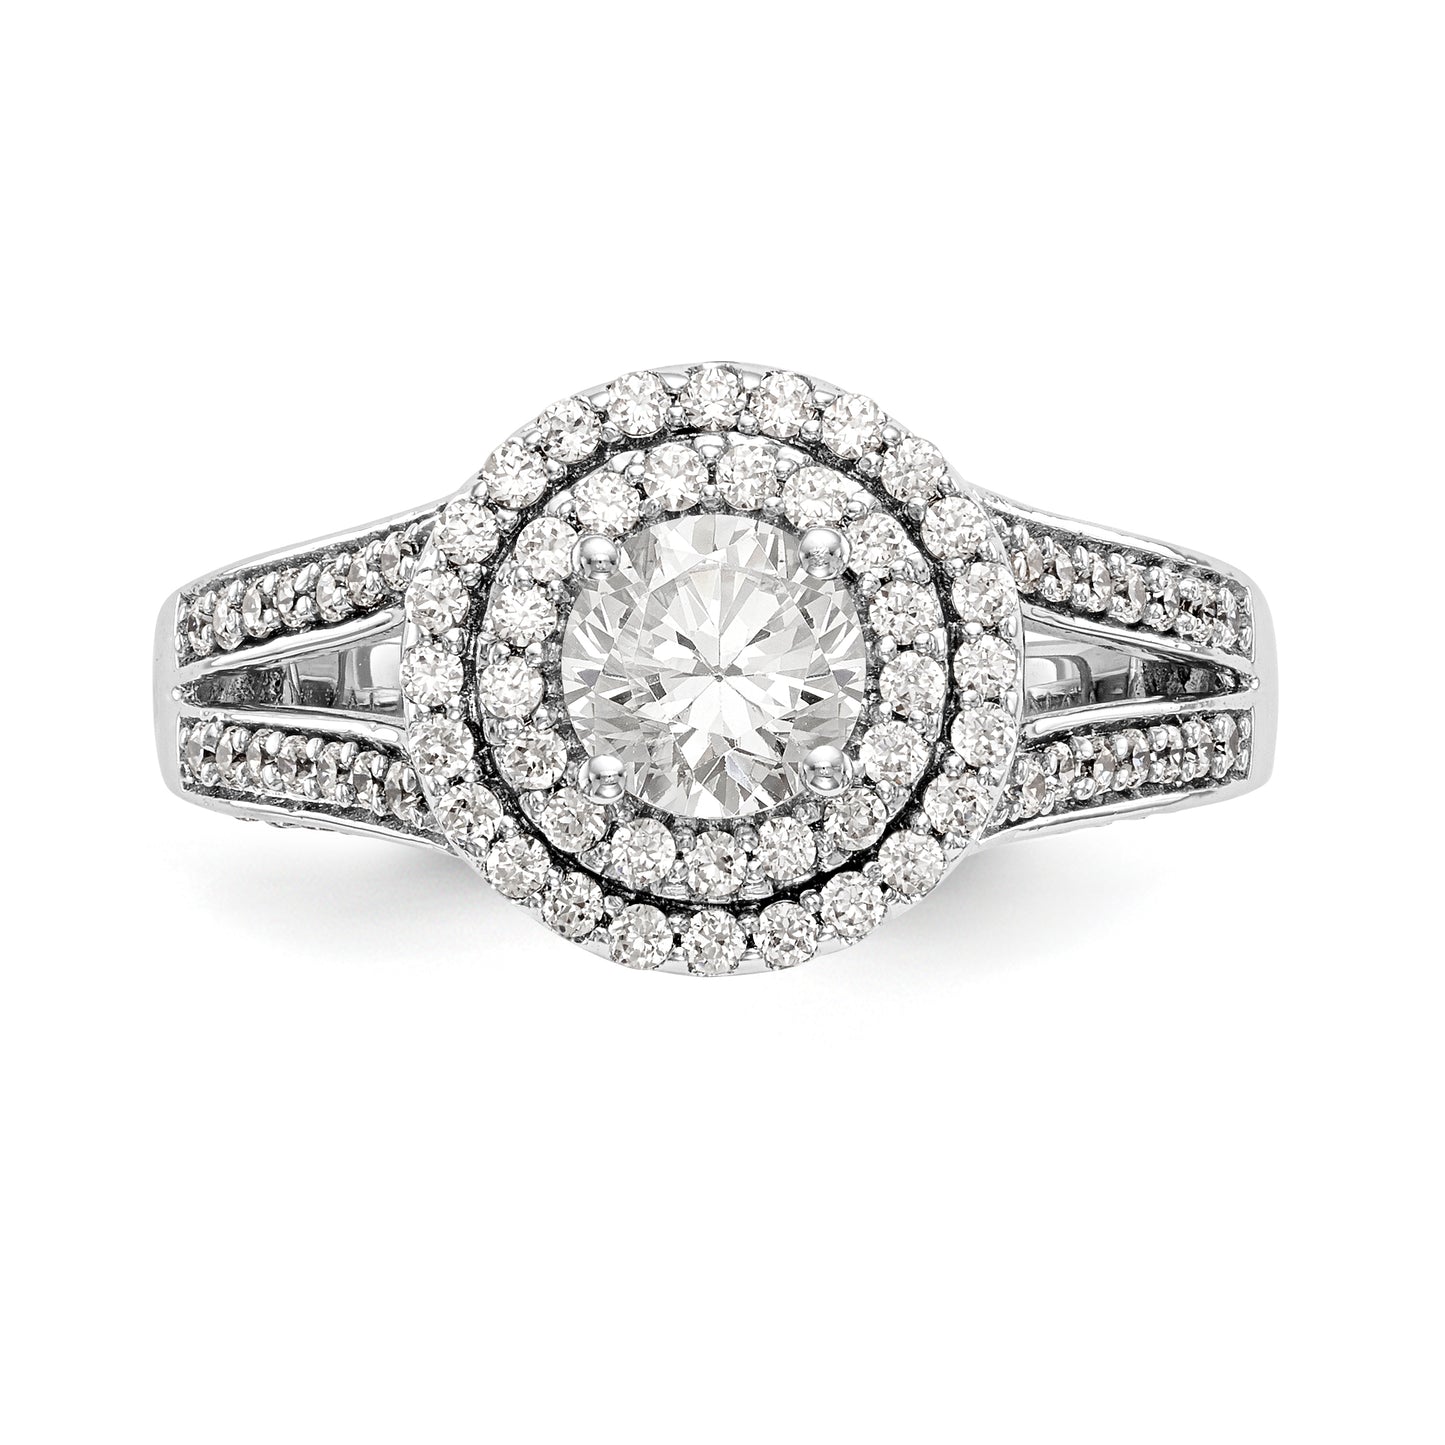 14K White Gold Round Simulated Diamond Halo Engagement Ring